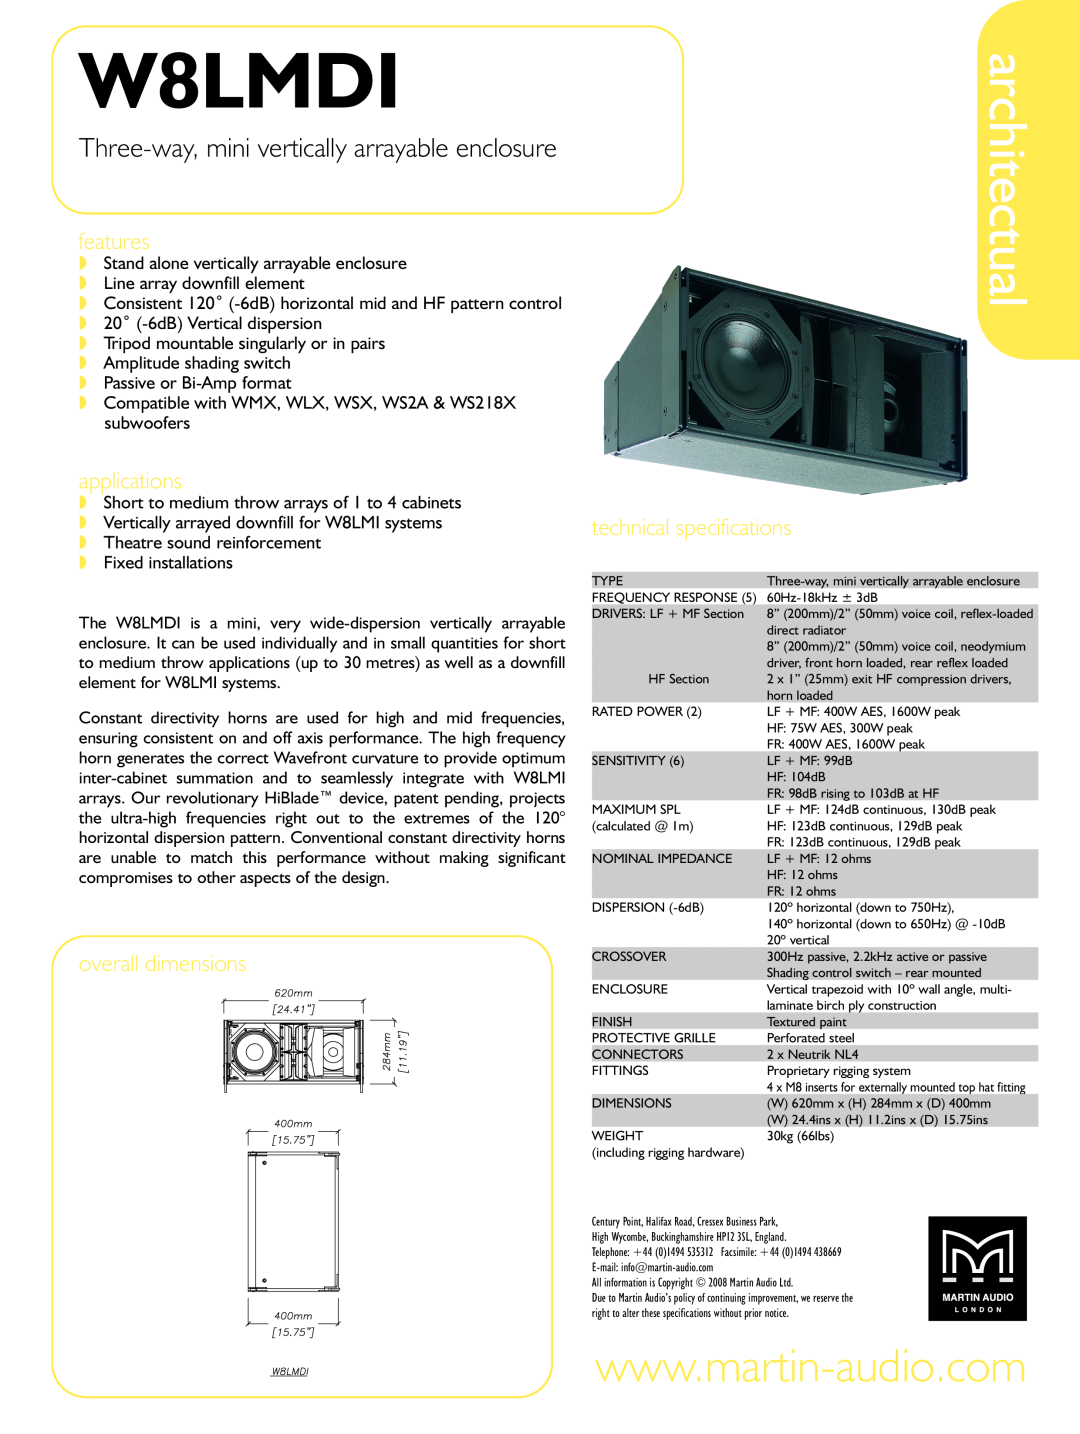 Martin Audio W8LMDI technical specifications architectual, Three-way,mini vertically arrayable enclosure, features 